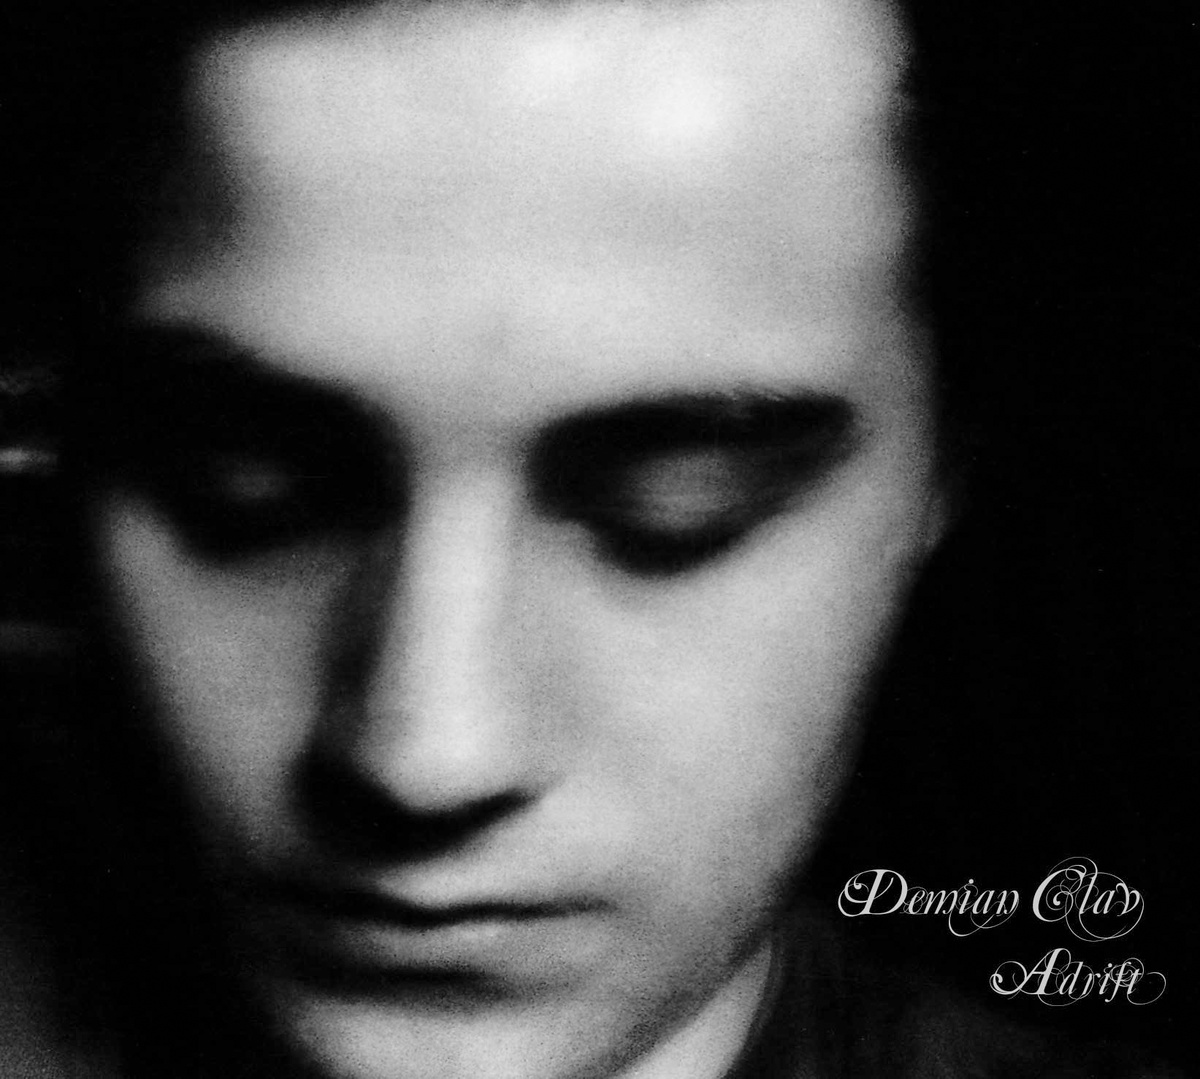 Demian Clav - Adrift (Ten Years Before Scardanelli) cover